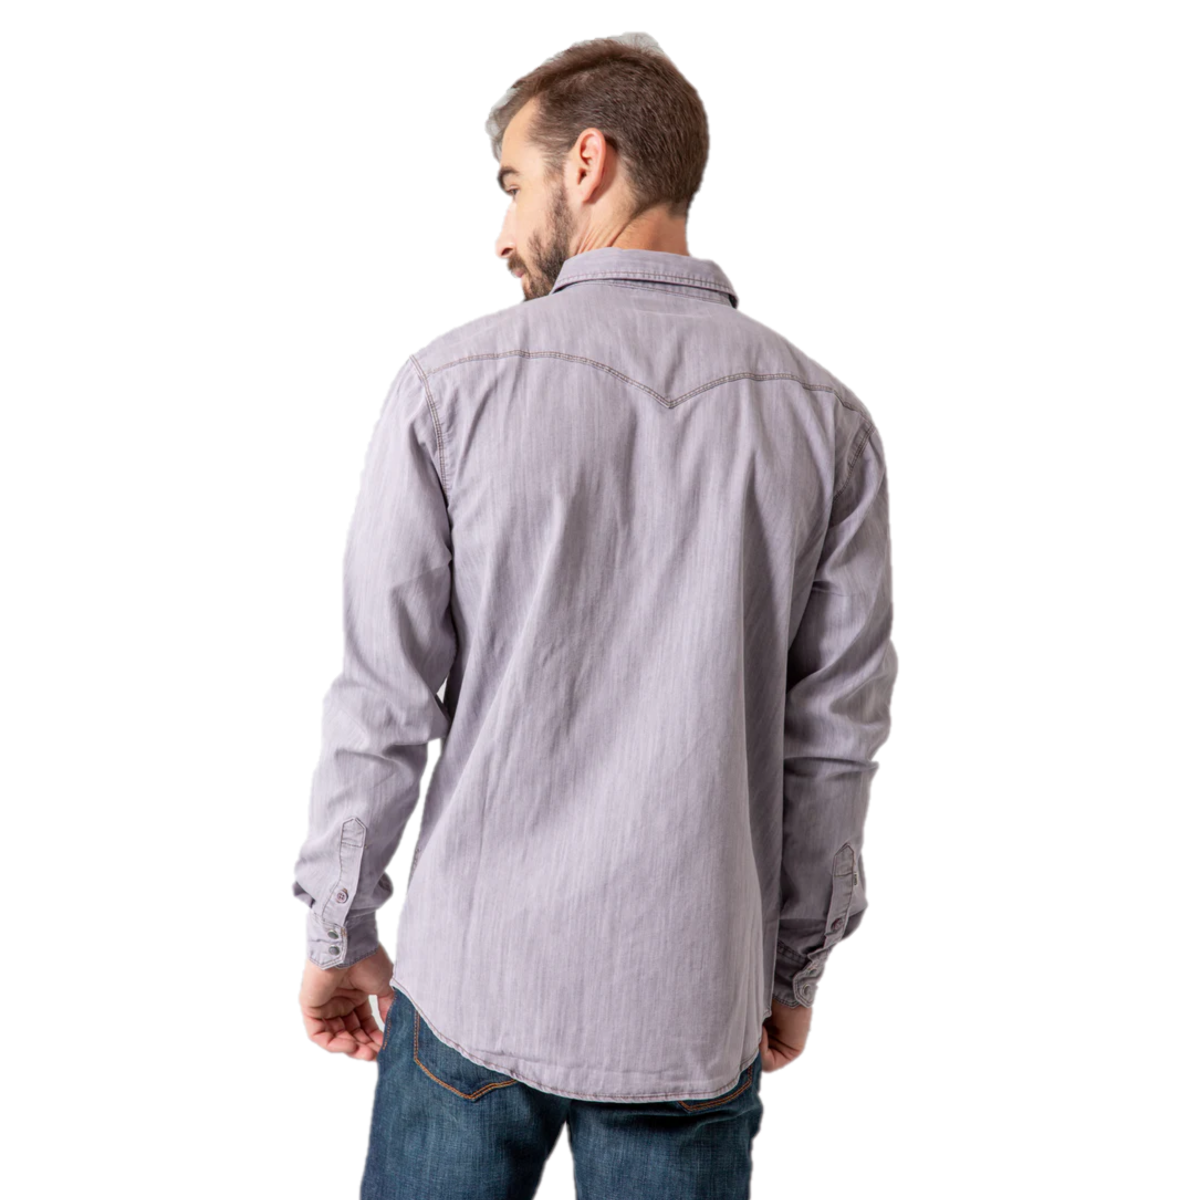 Kimes Ranch® Men's Grimes Grey Denim Long Sleeve Shirt GDS-GD